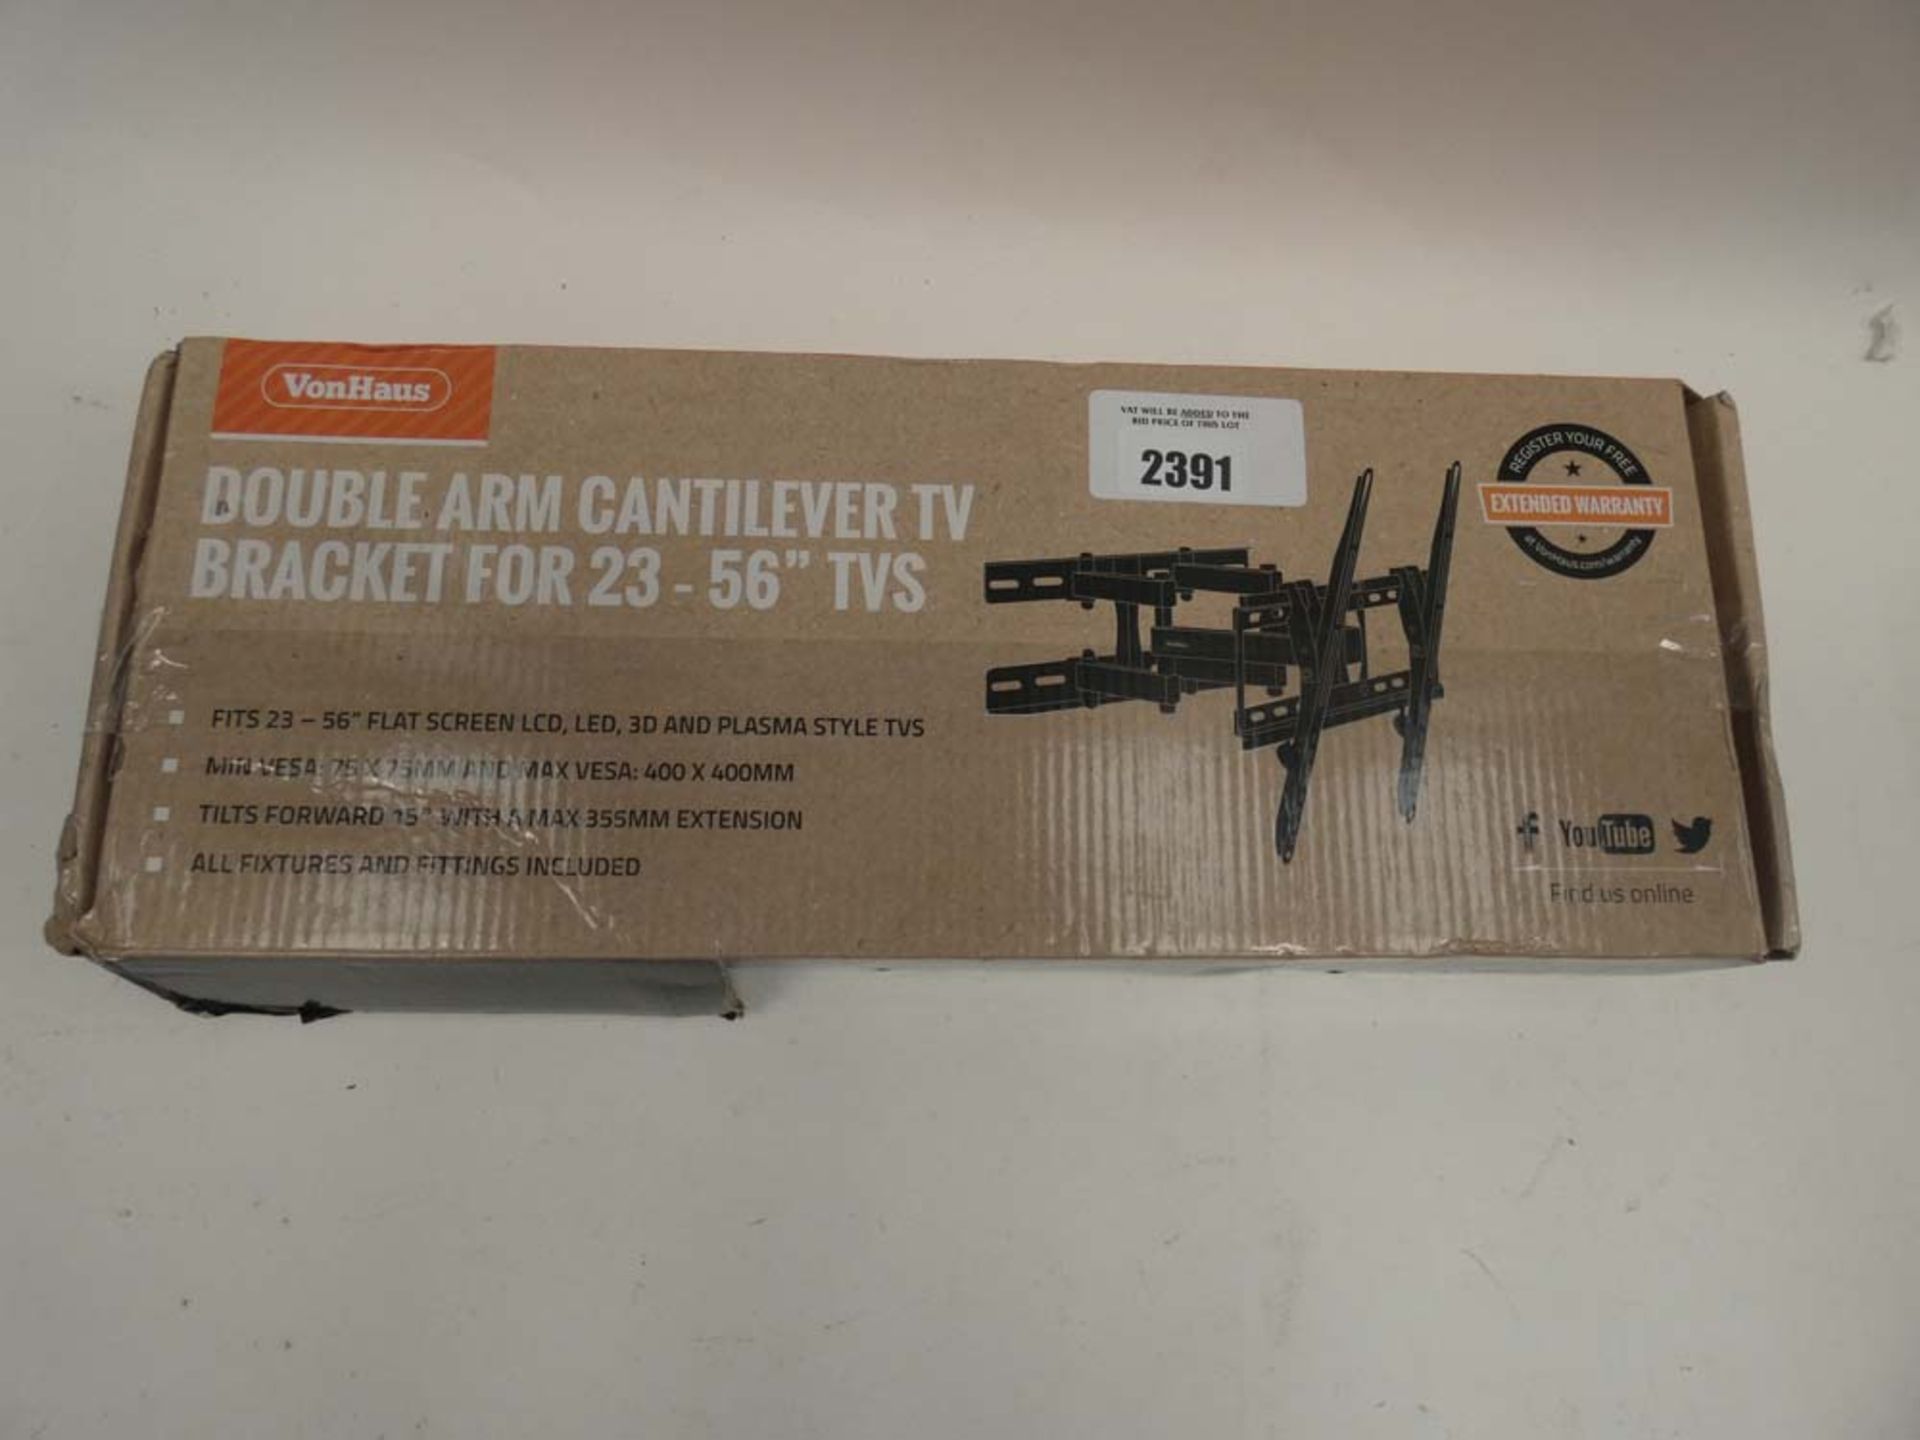 VonHaus double arm cantilever TV bracket for 23-56'' TVs